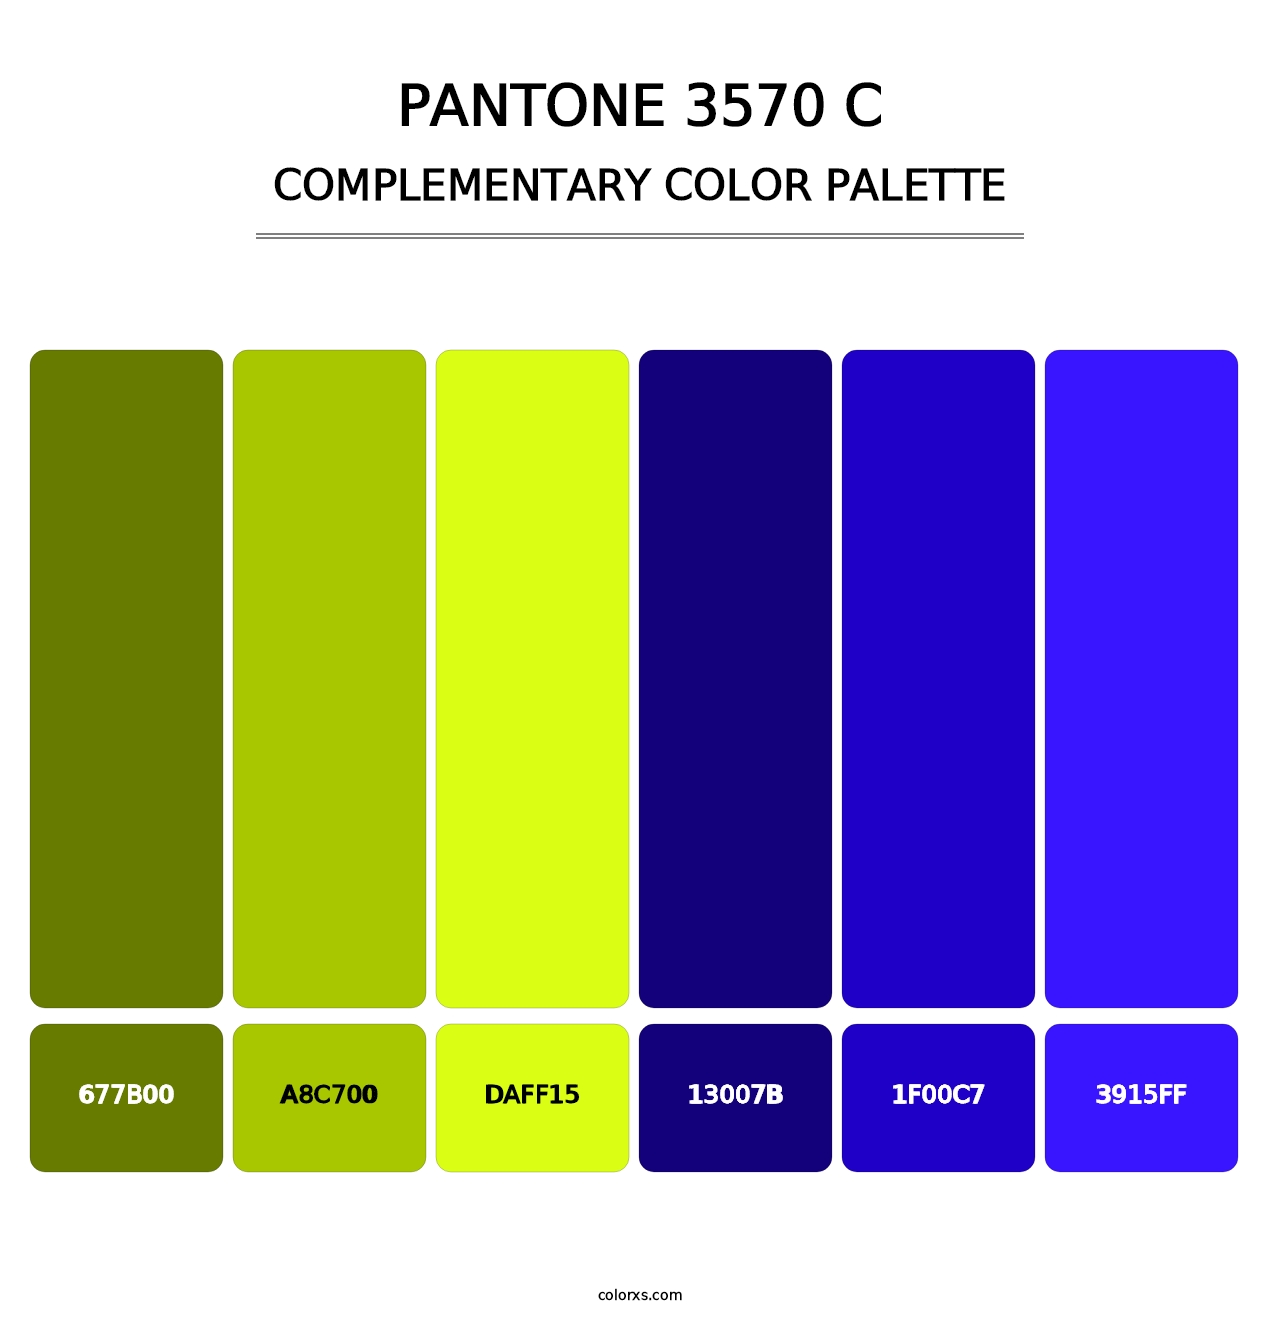 PANTONE 3570 C - Complementary Color Palette